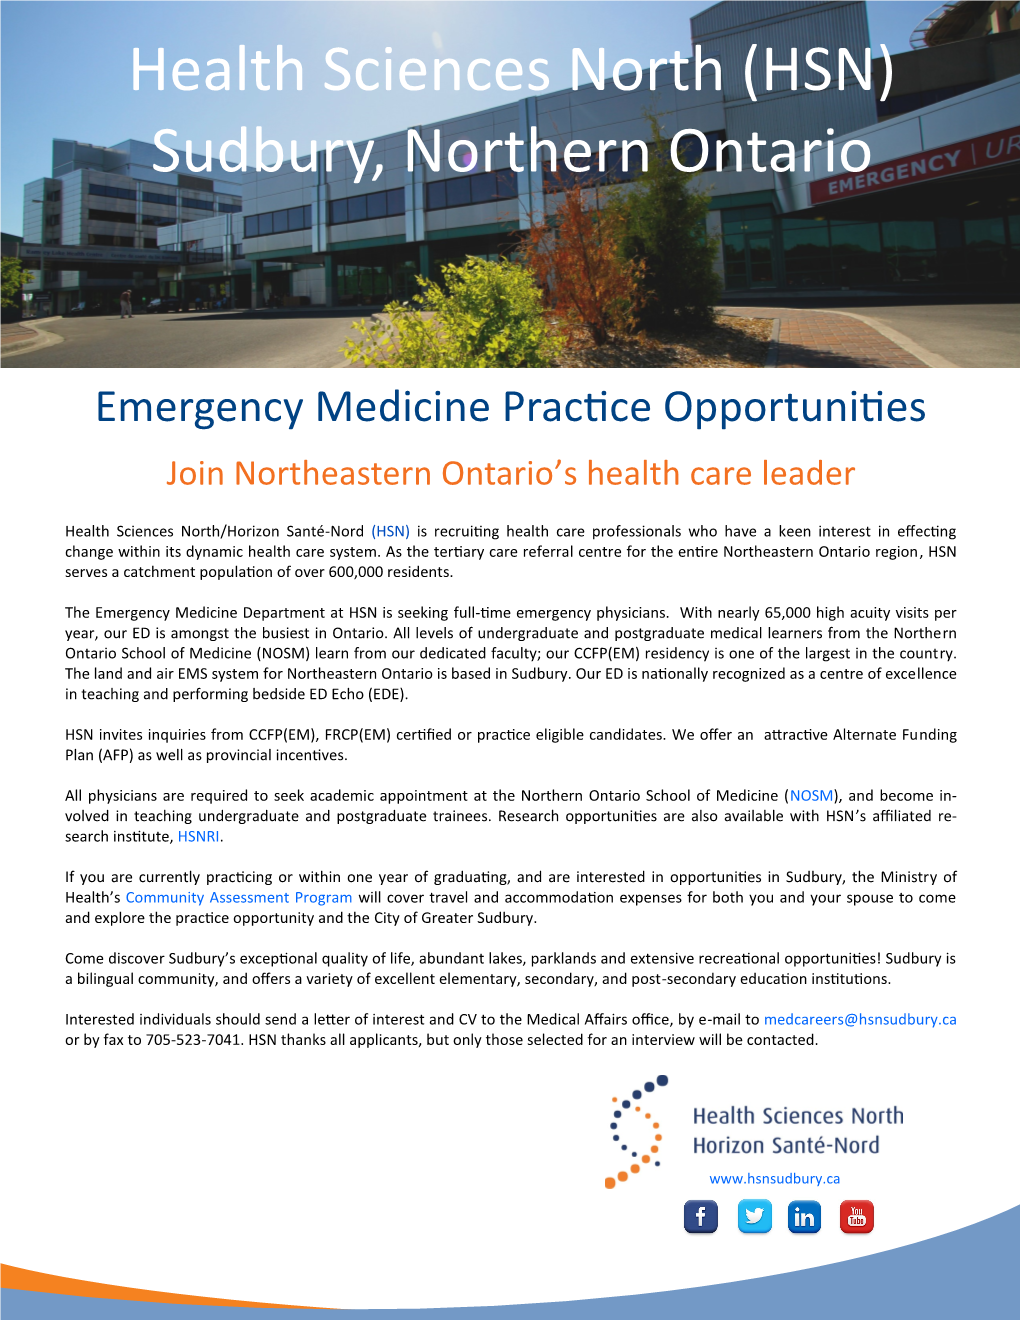 Emergency Medicine Practice Opportunities Join Northeastern Ontario’S Health Care Leader